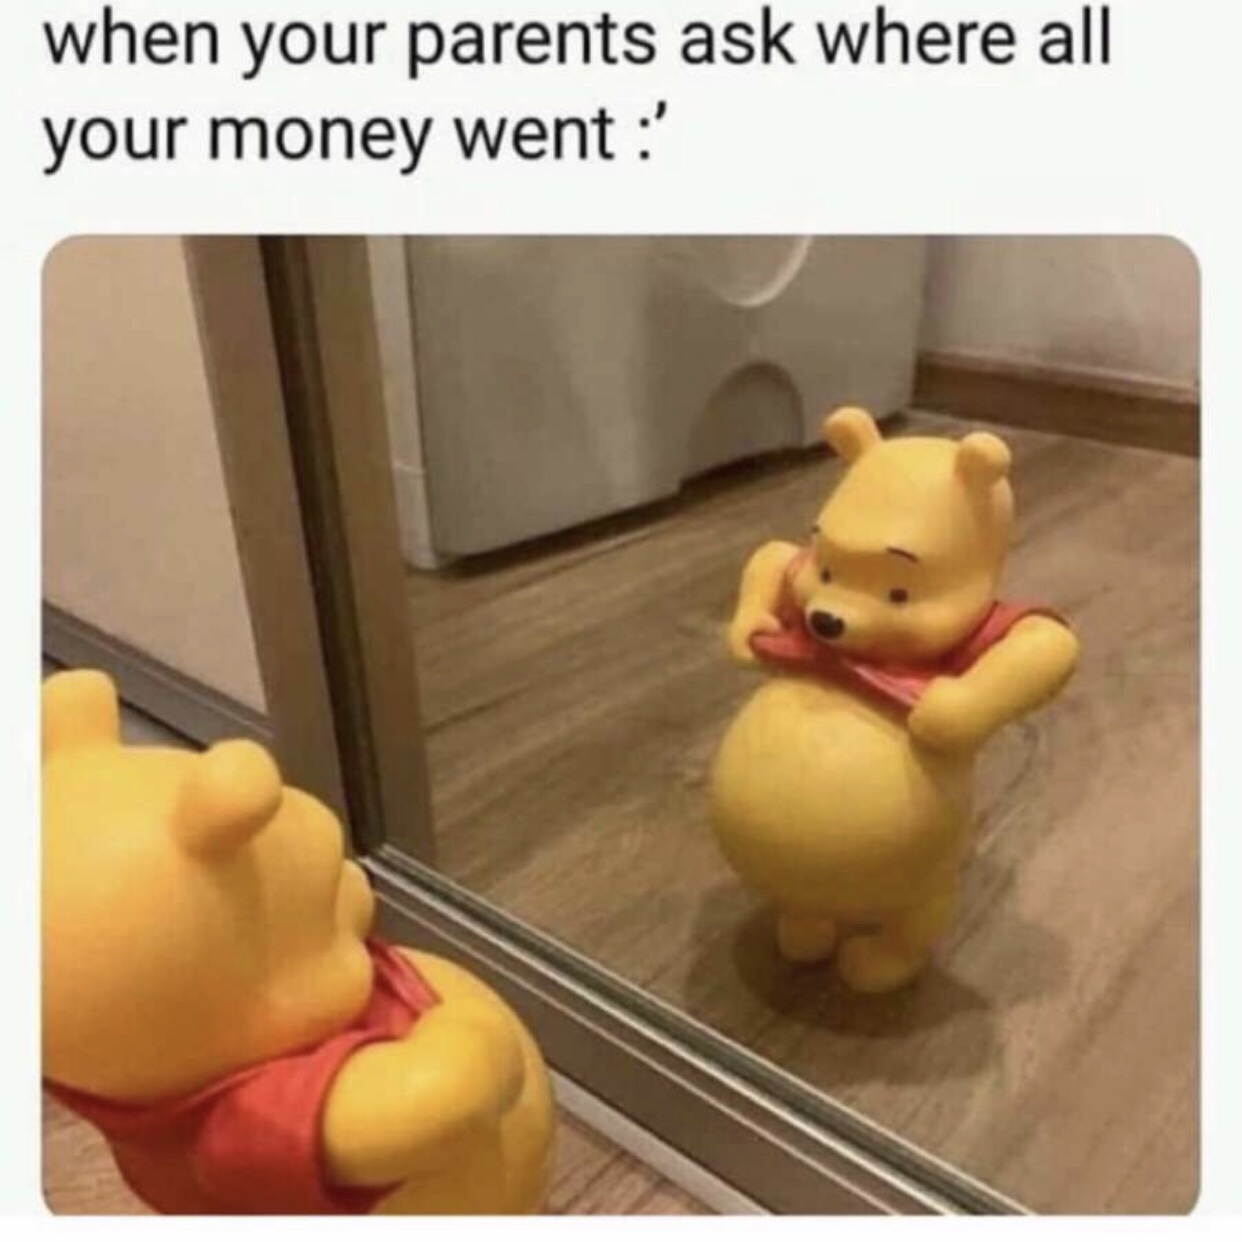 Disney meme - your parents ask where all your money went pooh - when your parents ask where all your money went '